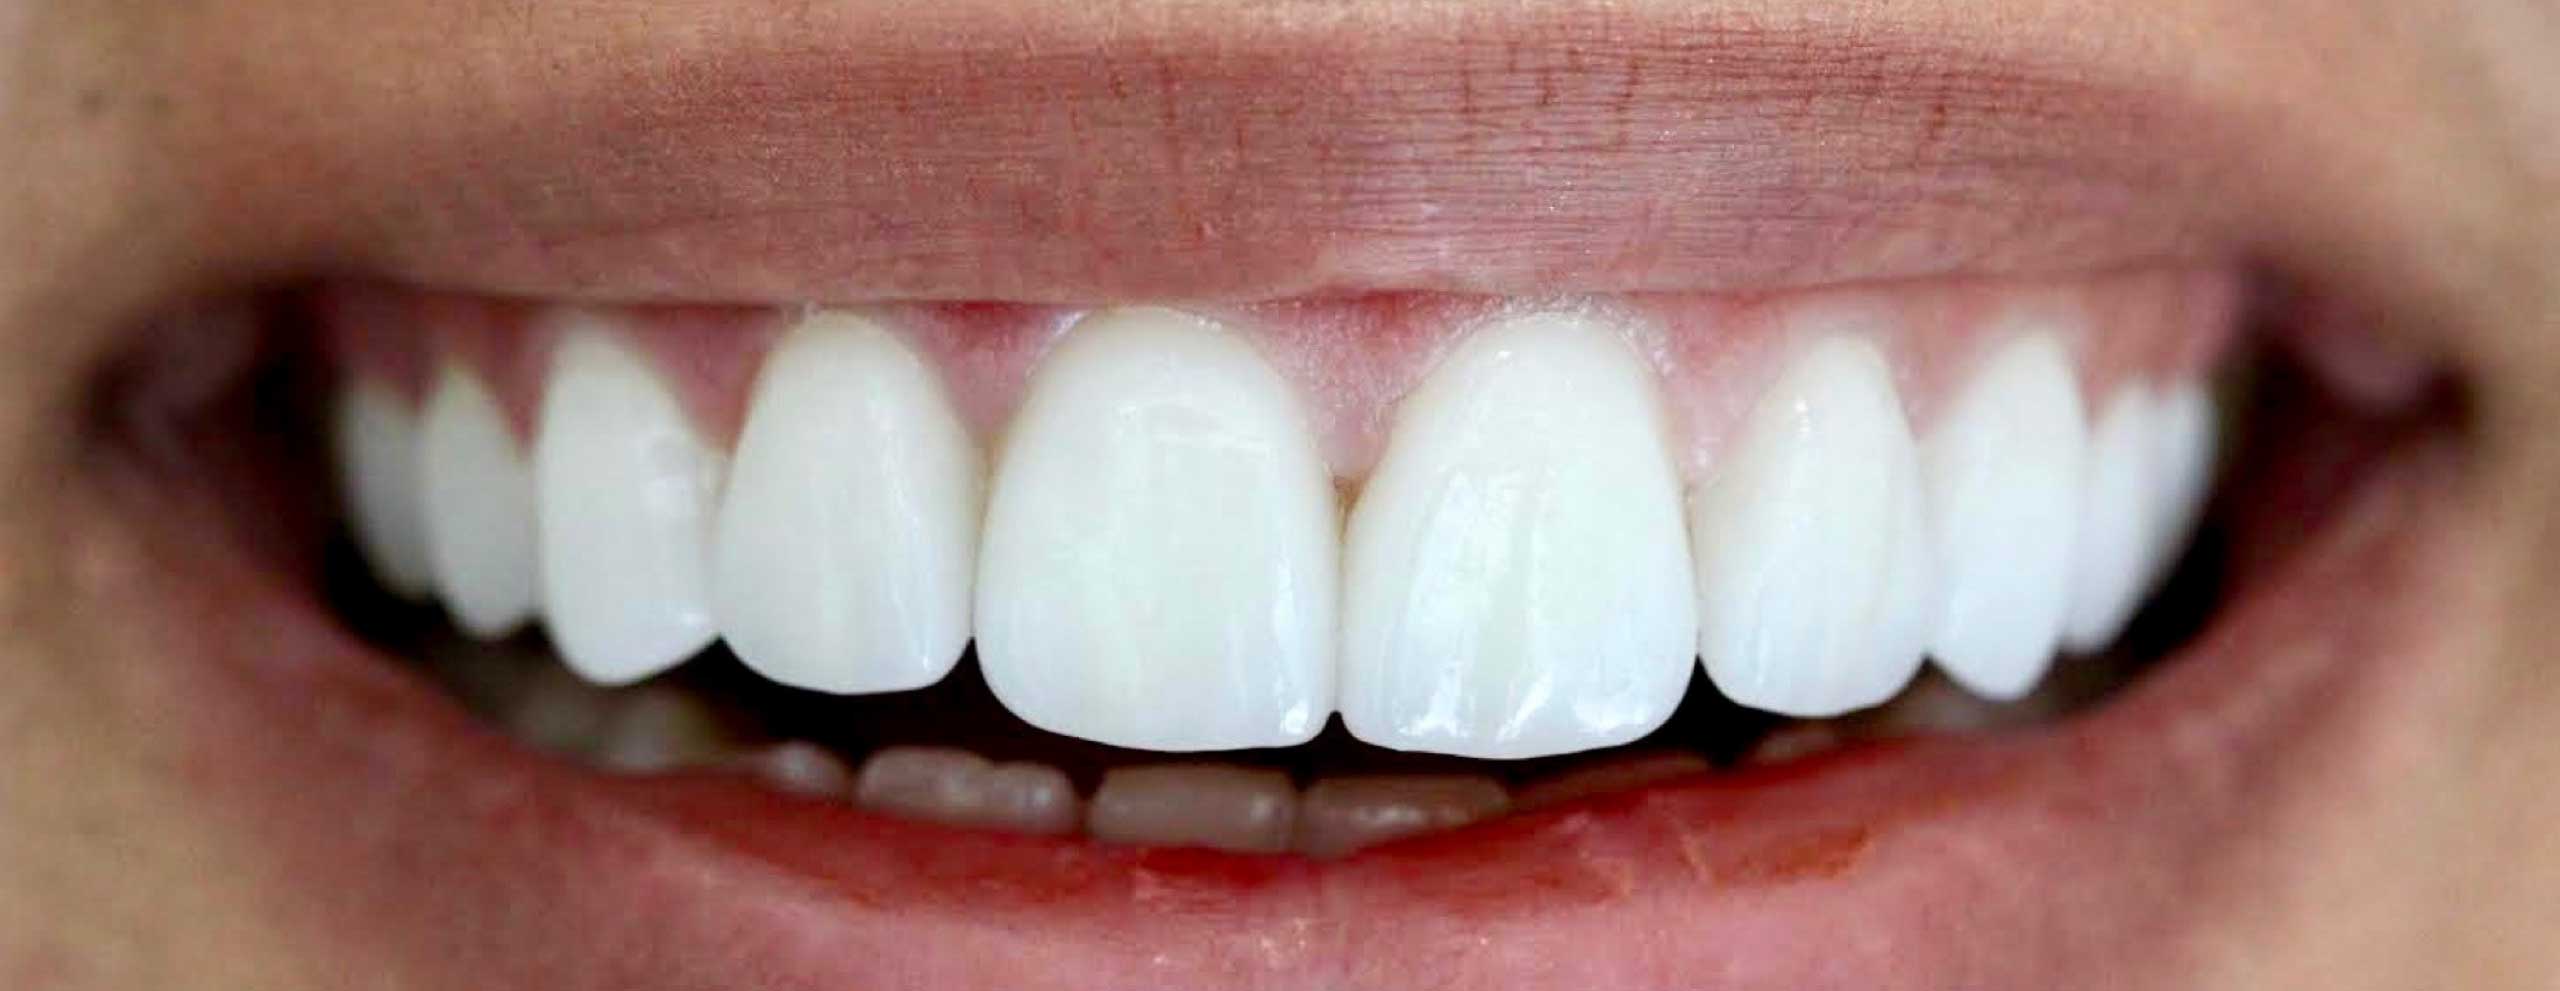 teeth whitening strips